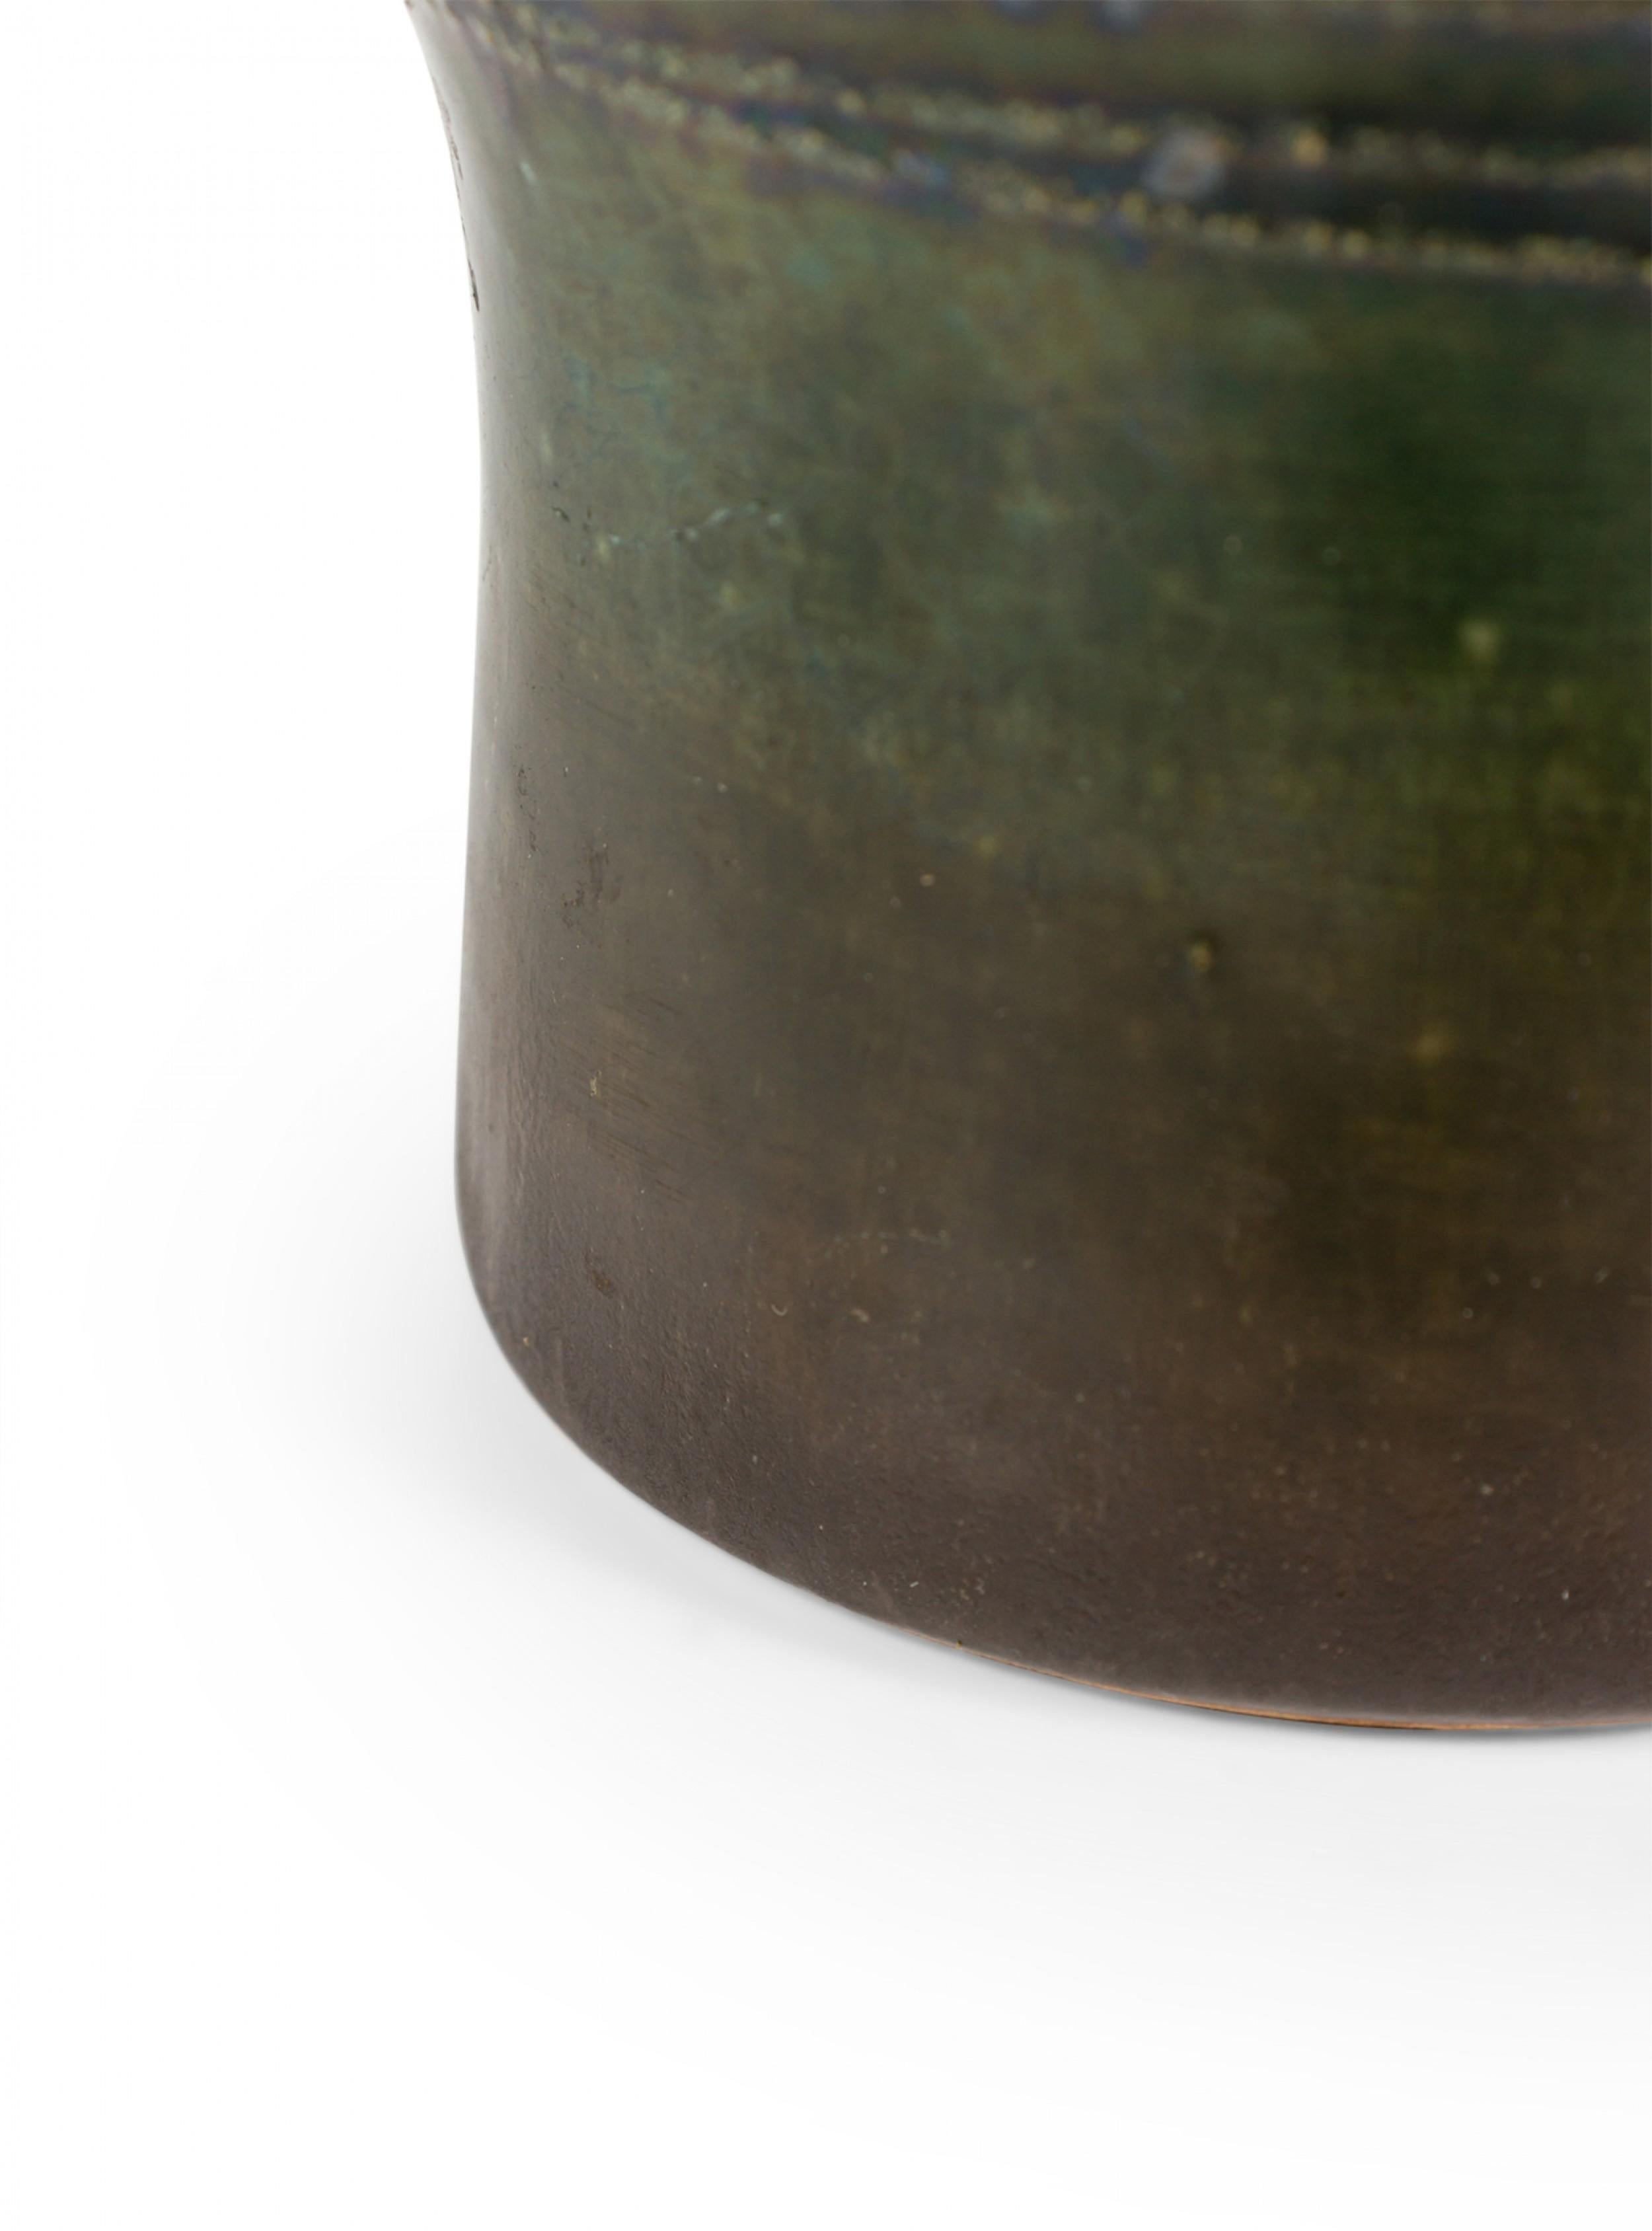 Strehla Keramik East German Mid-Century Multi-Tonal Green Glazed Vase In Good Condition For Sale In New York, NY